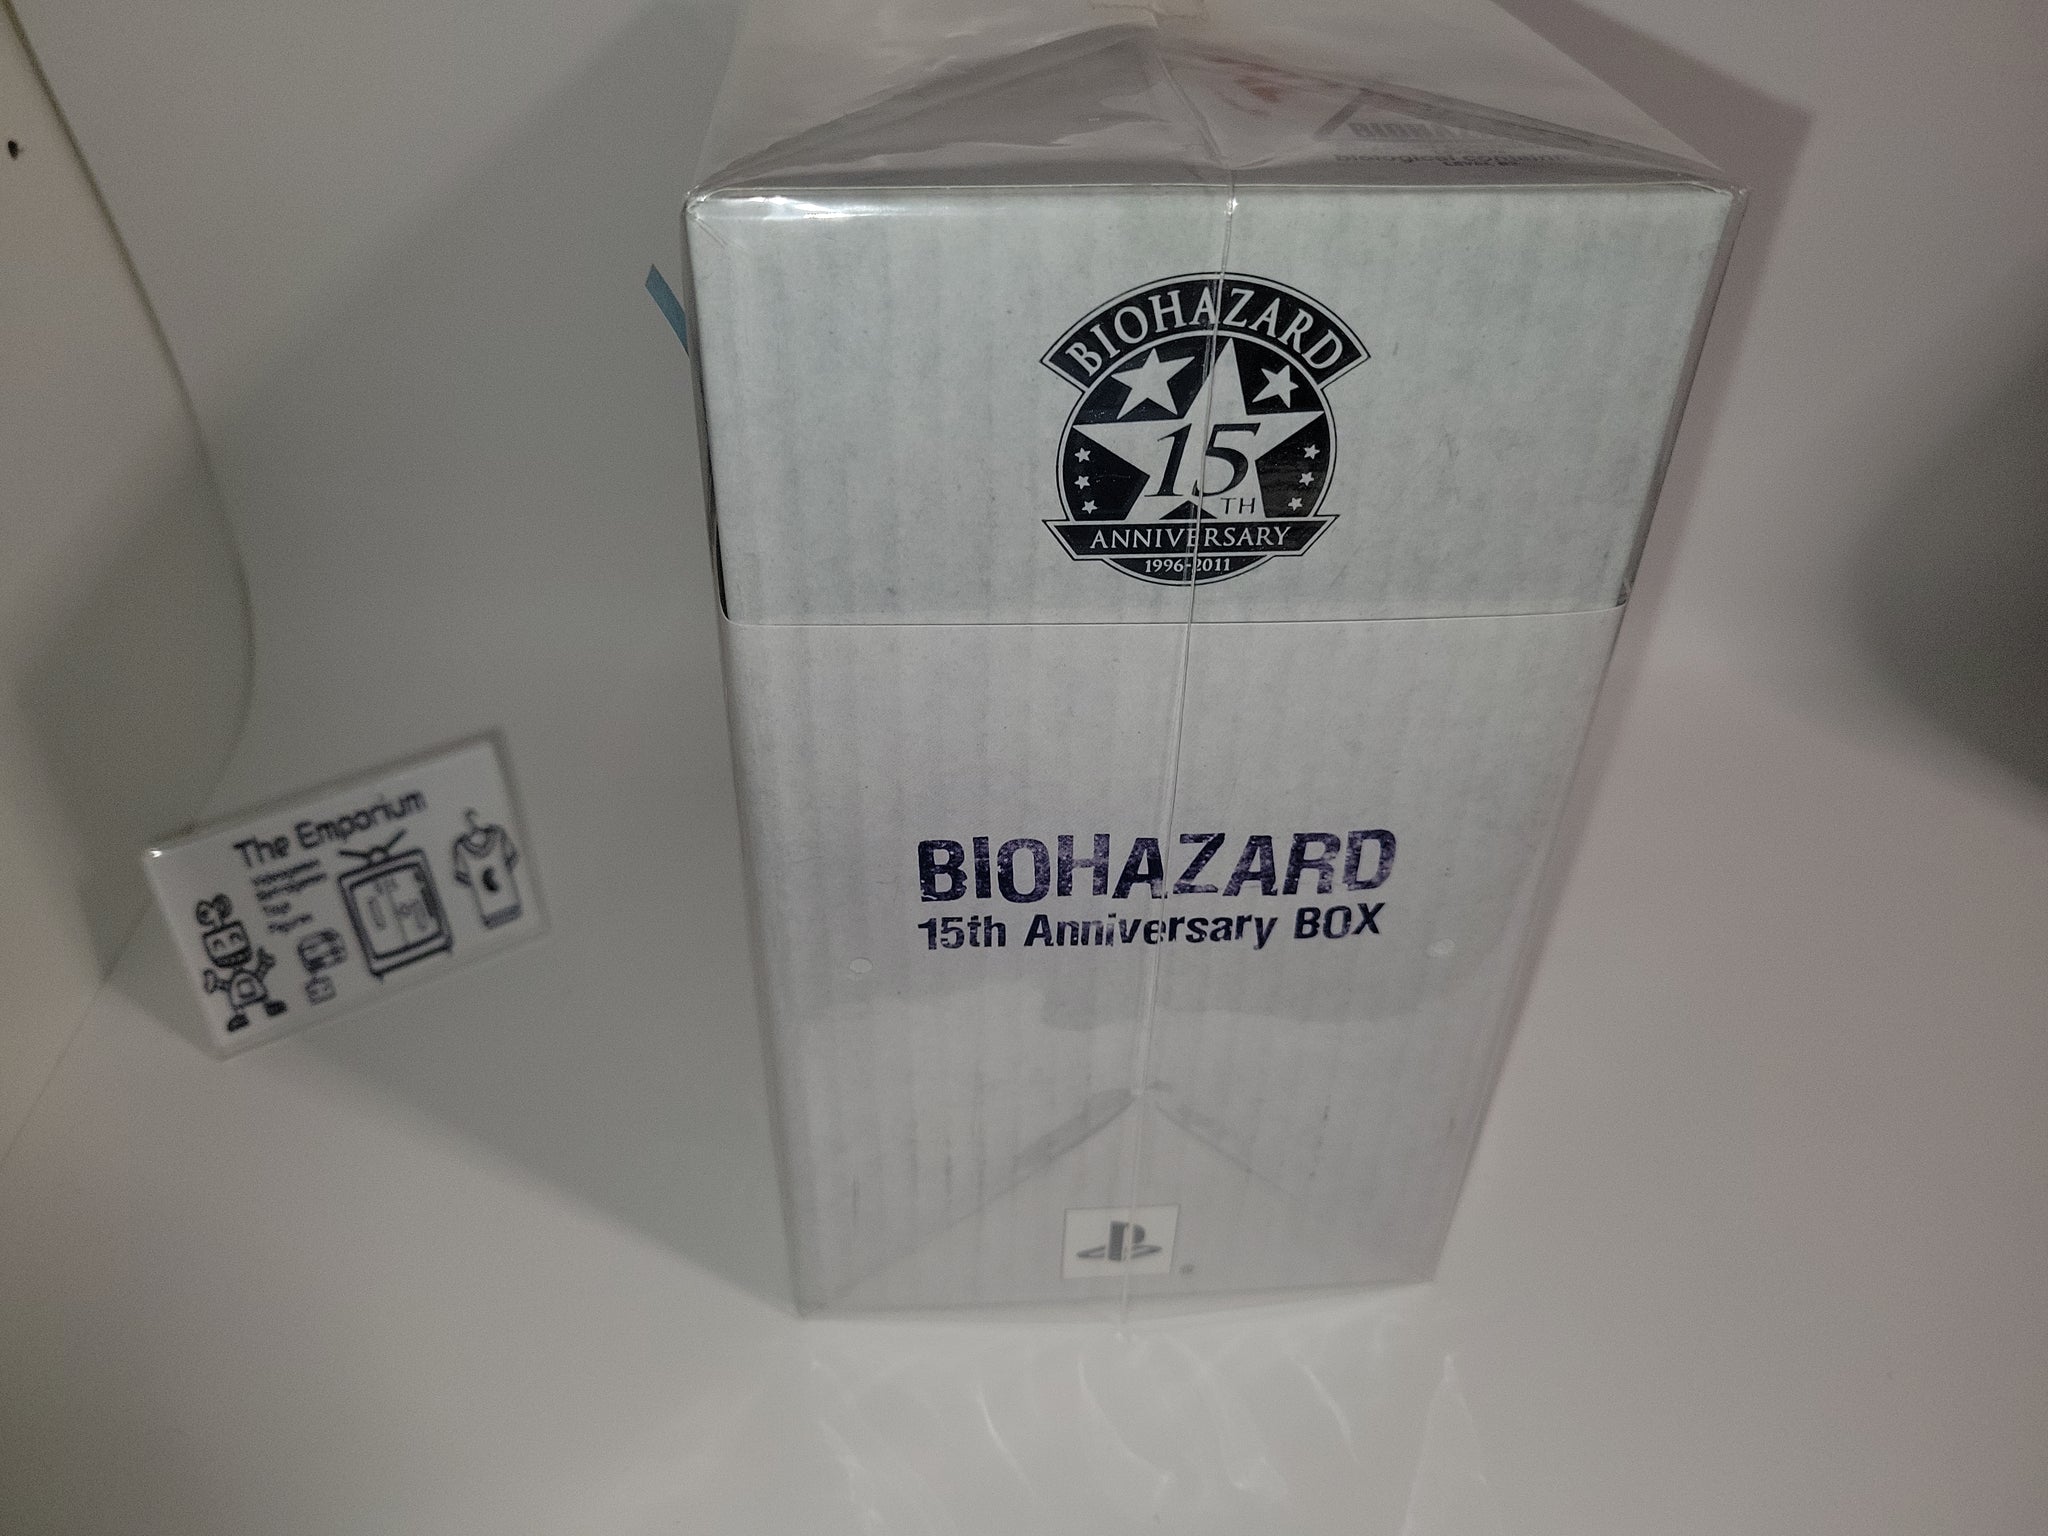 Biohazard 15th Anniversary Box - Sony PS3 Playstation 3 – The